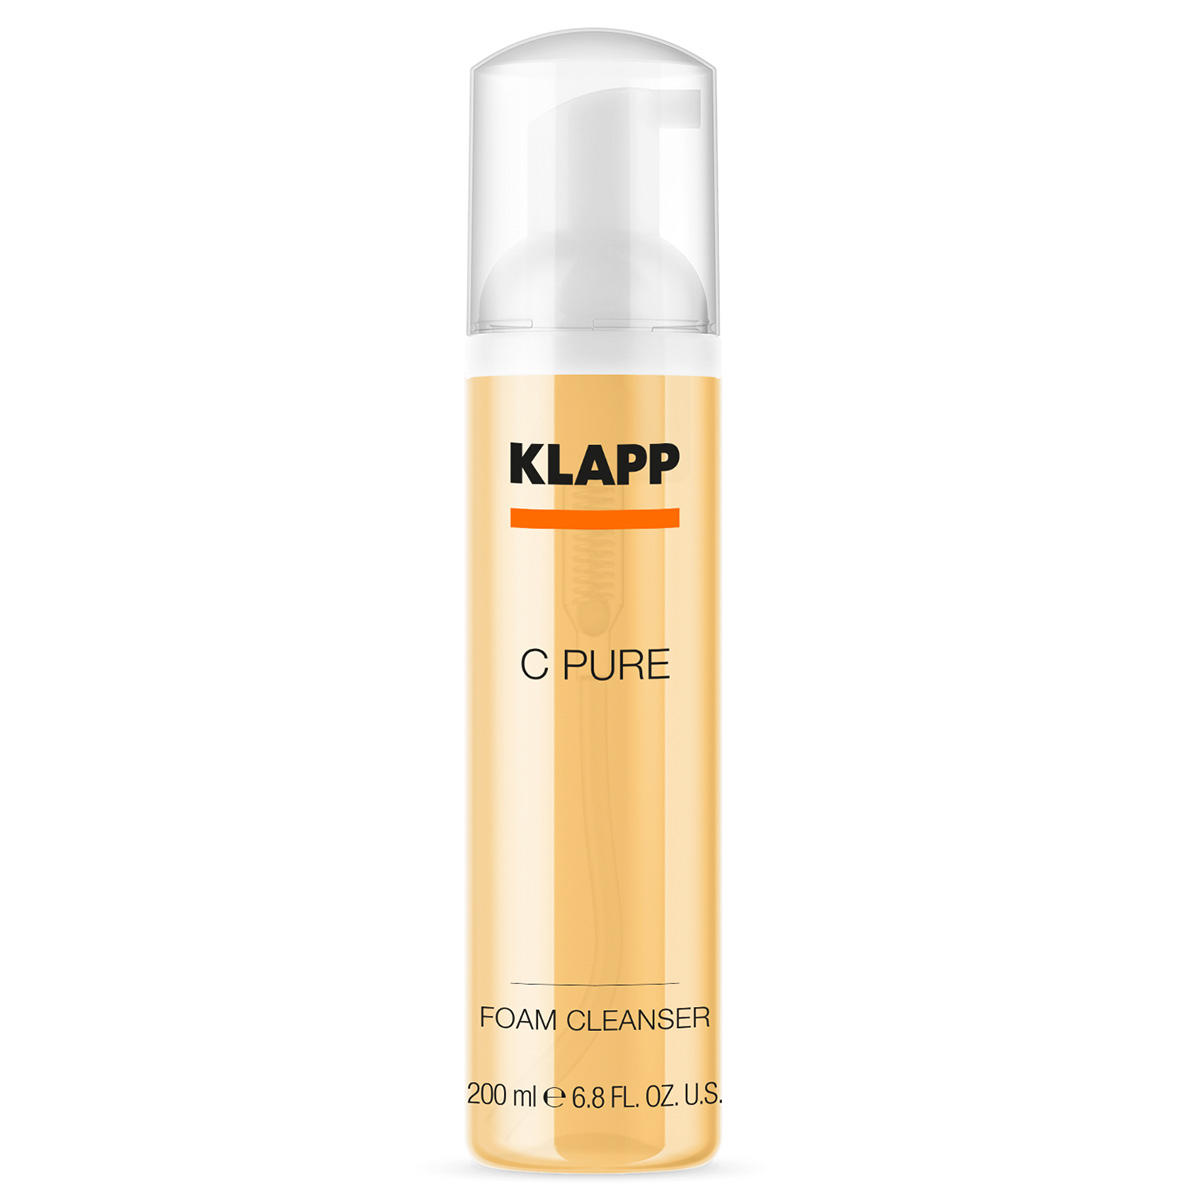 KLAPP C PURE Foam Cleanser 200 ml - 1